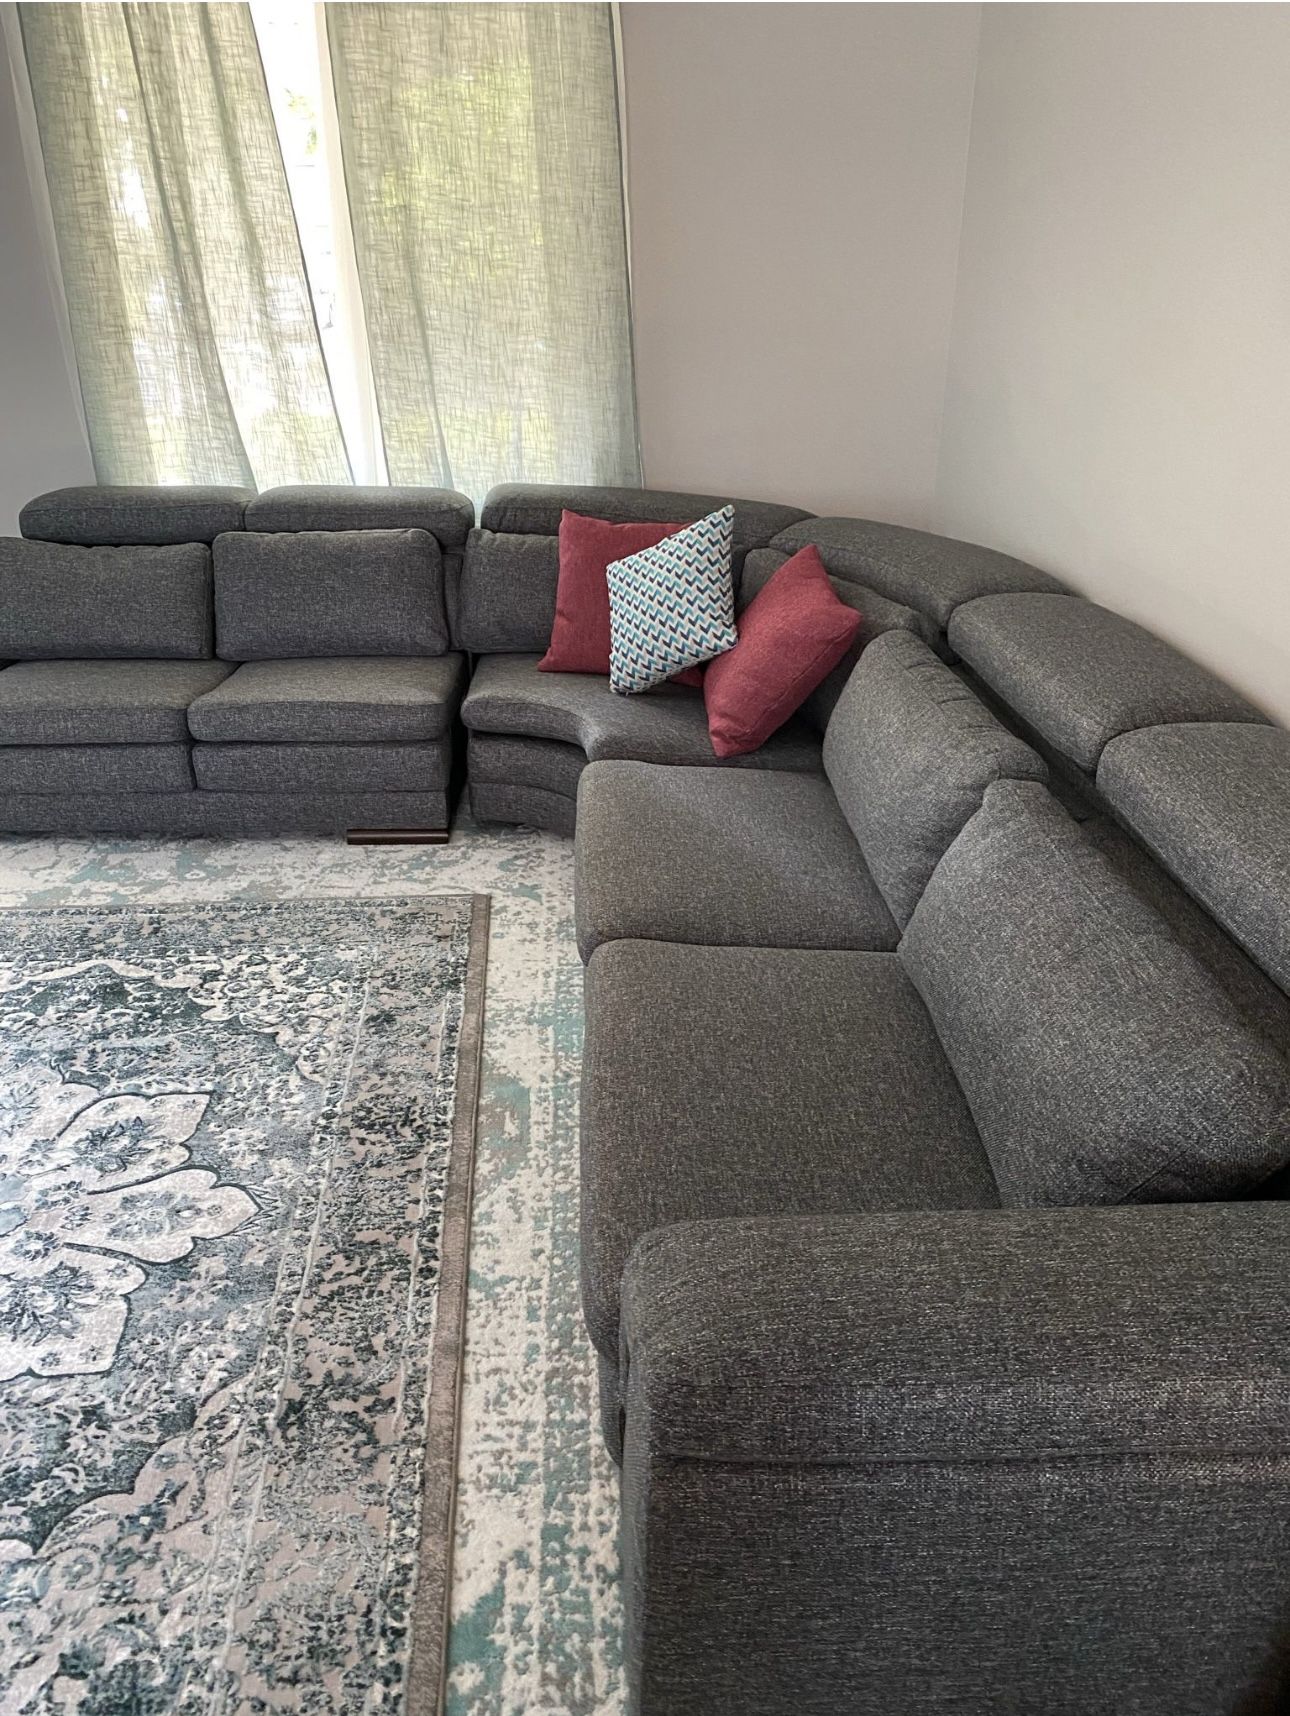 Beautiful Large Sofa From Turkey